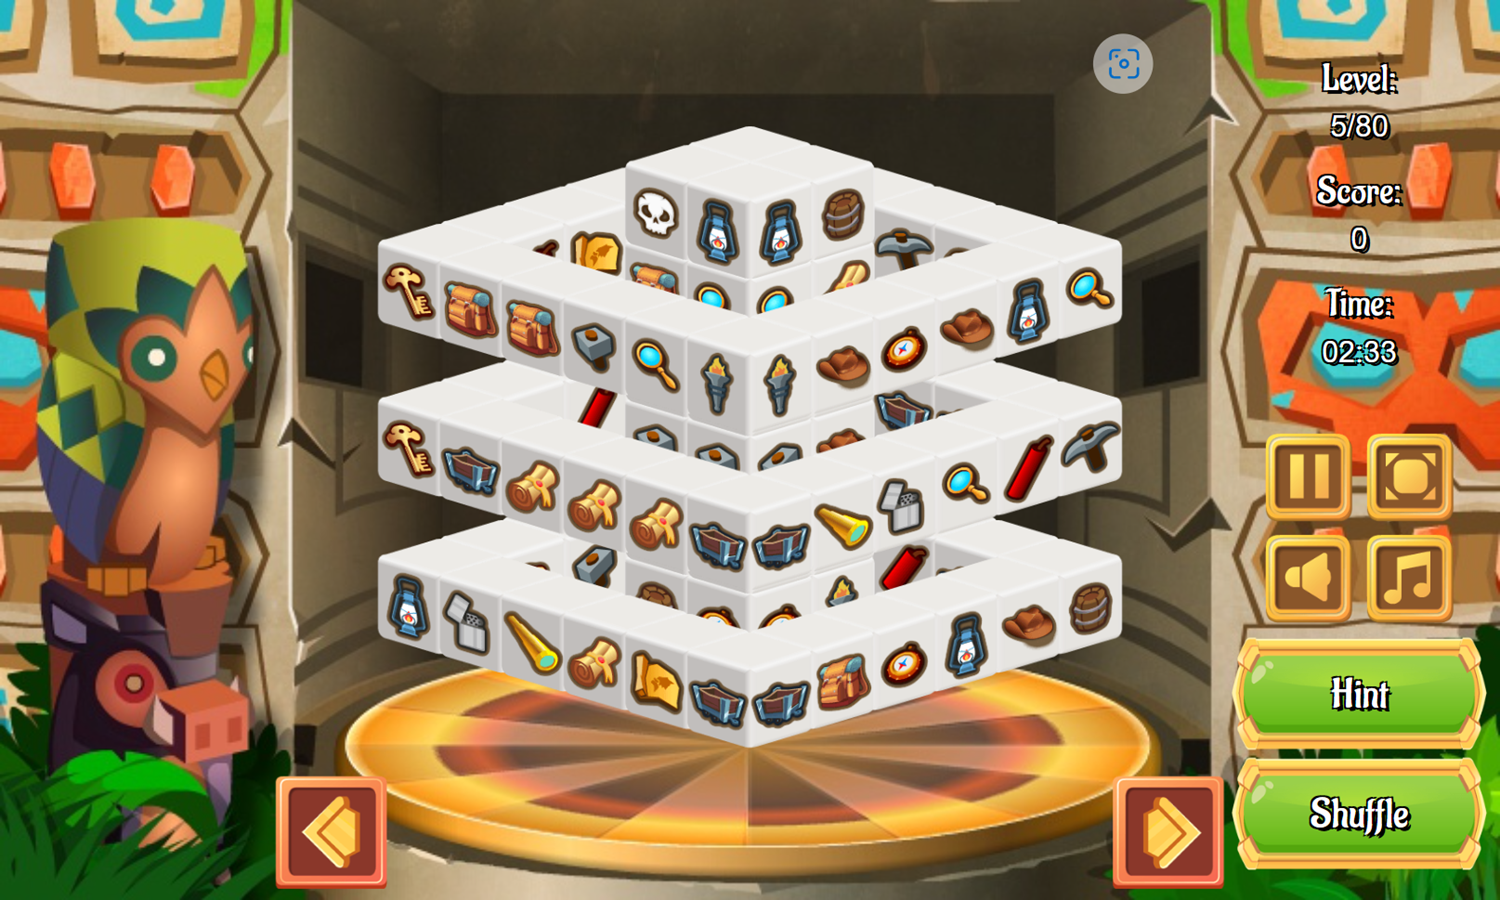 Travelers Quest Game Level Progress Screenshot.